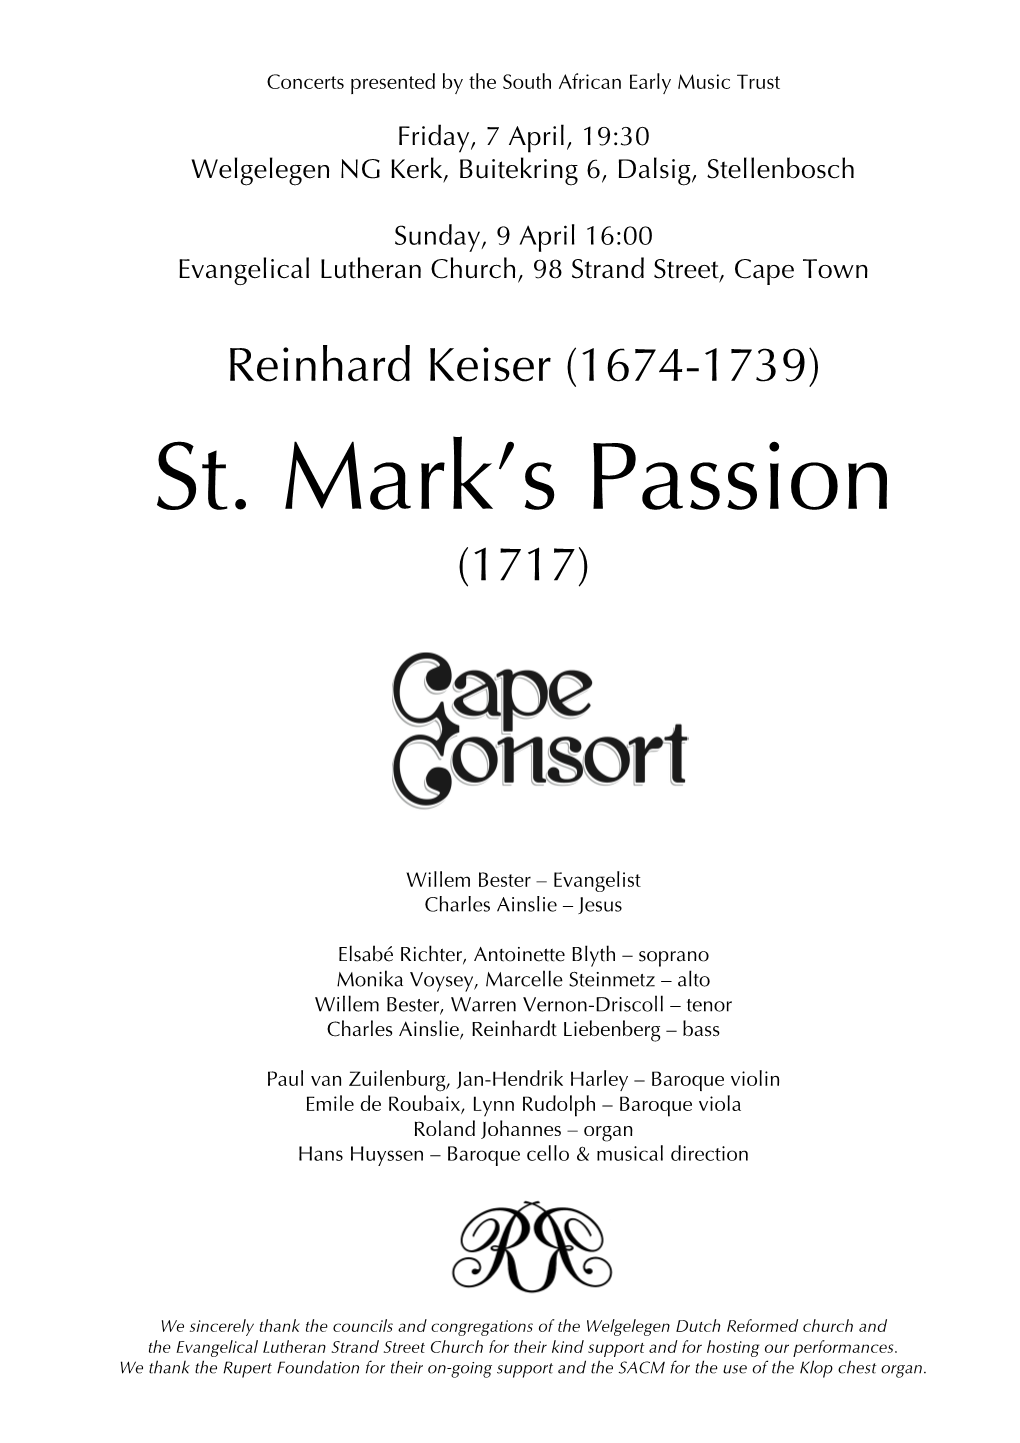 Reinhard Keiser, St Mark's Passion